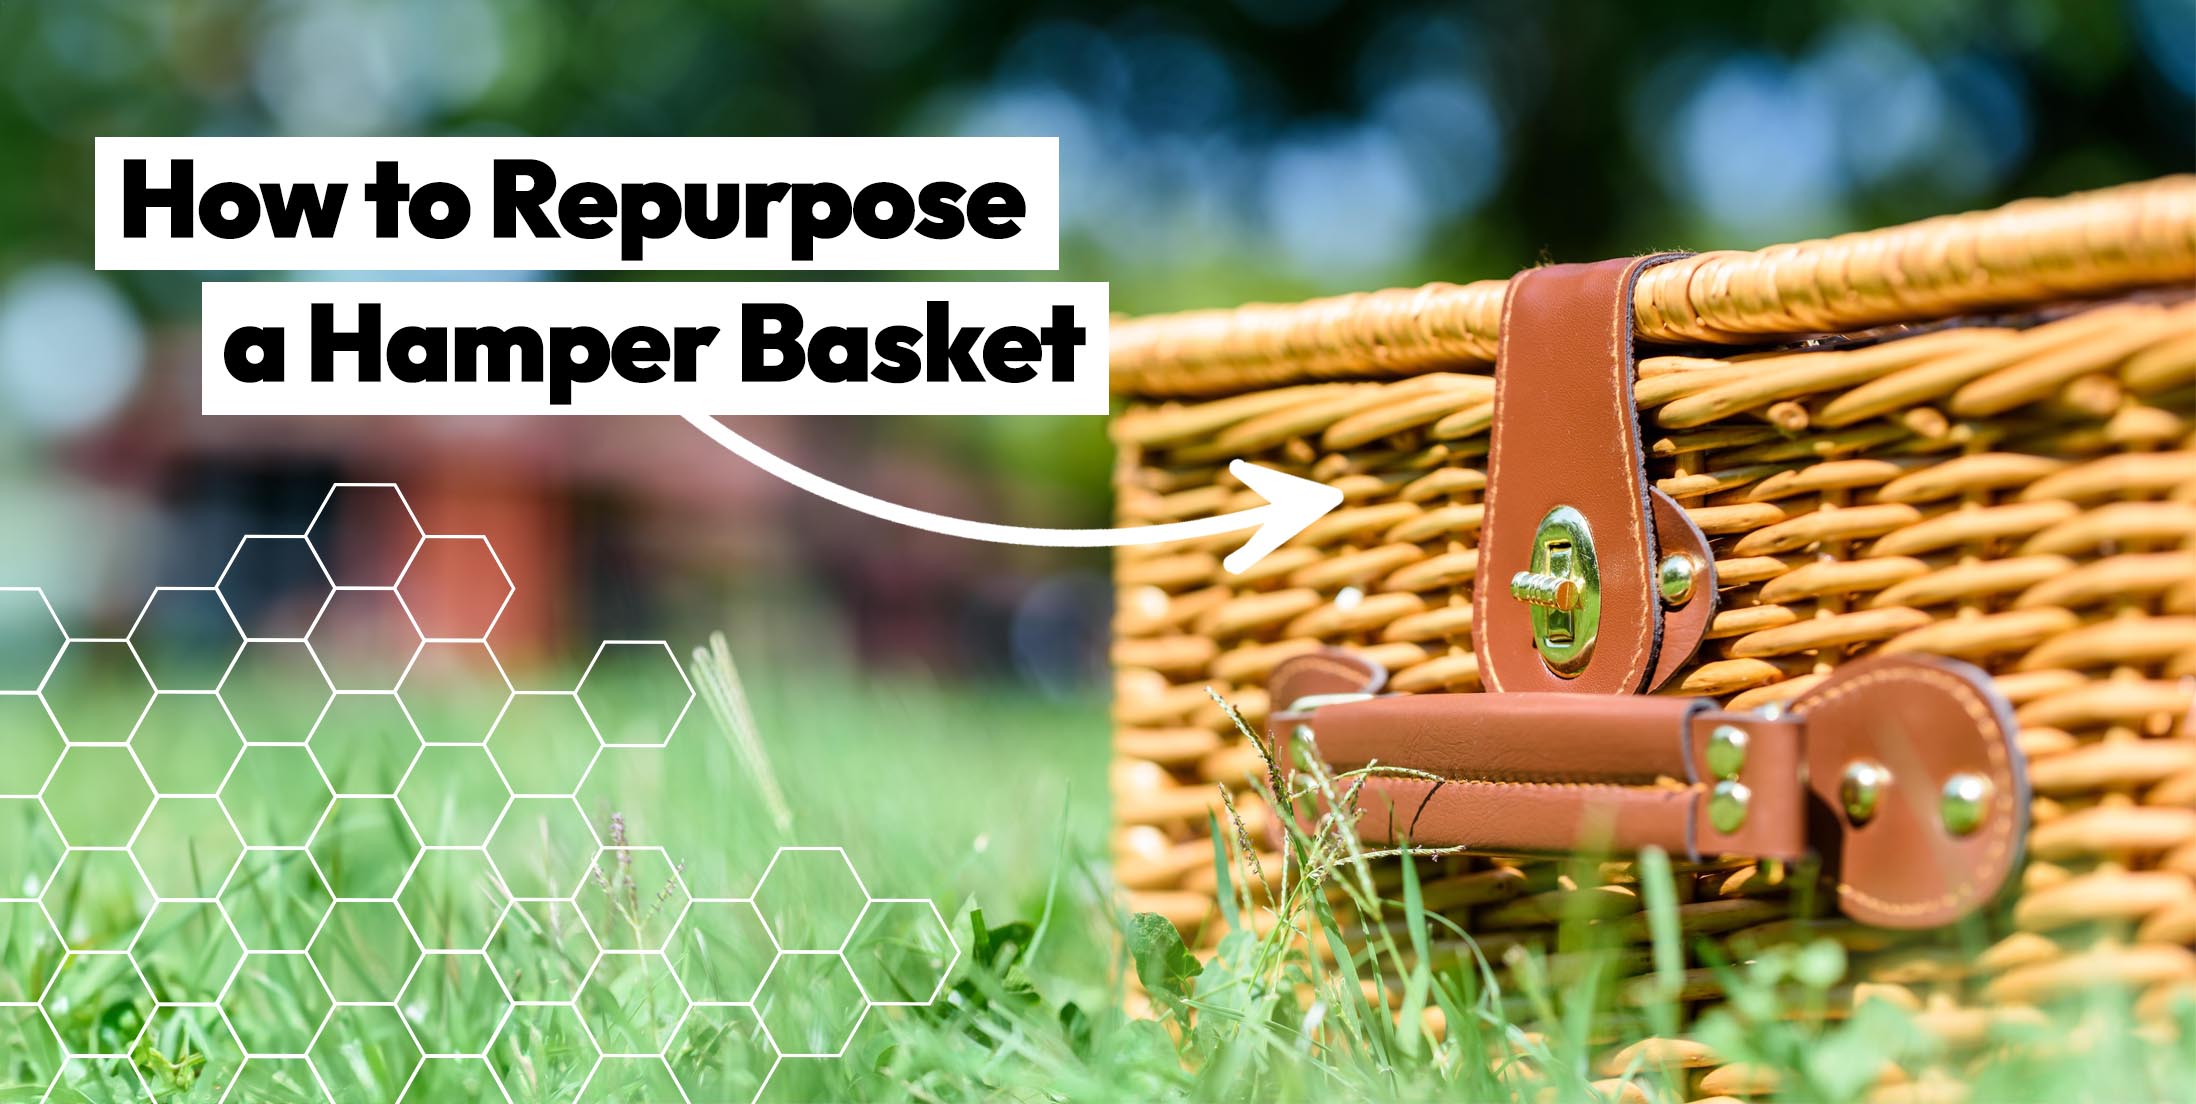 How to Repurpose a Hamper Basket